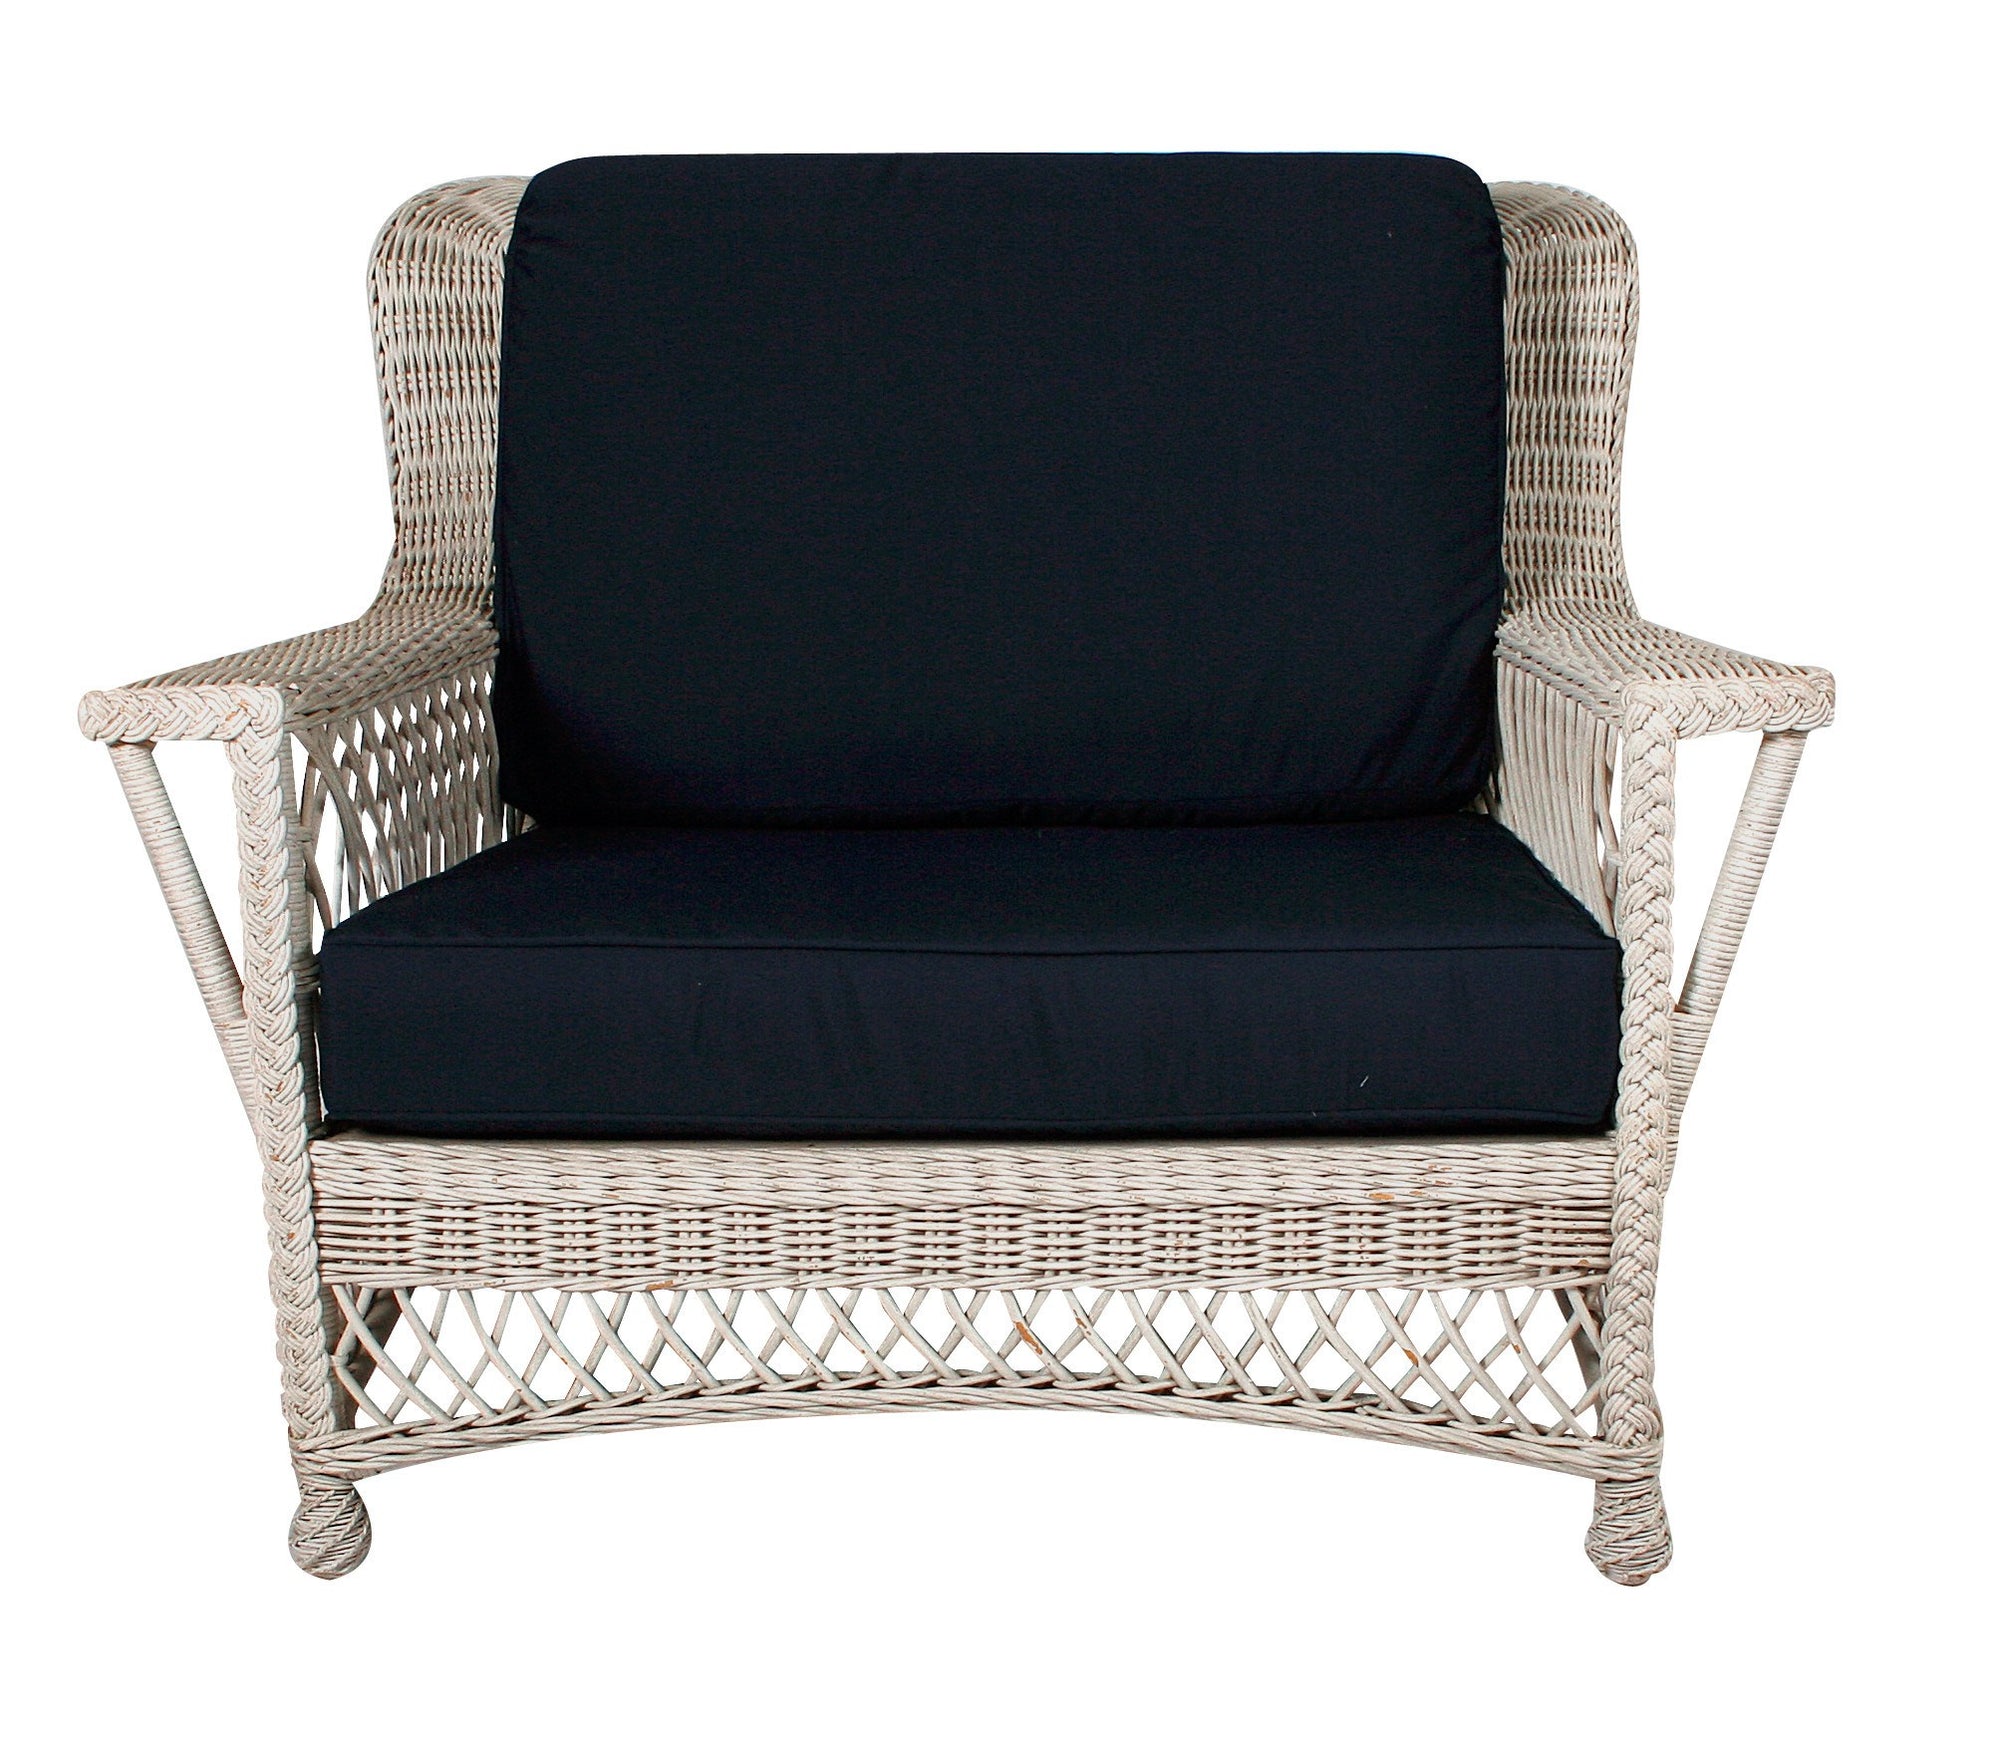 Designer Wicker & Rattan By Tribor Rockport Chair and a Half by Designer Wicker from Tribor Chair - Rattan Imports